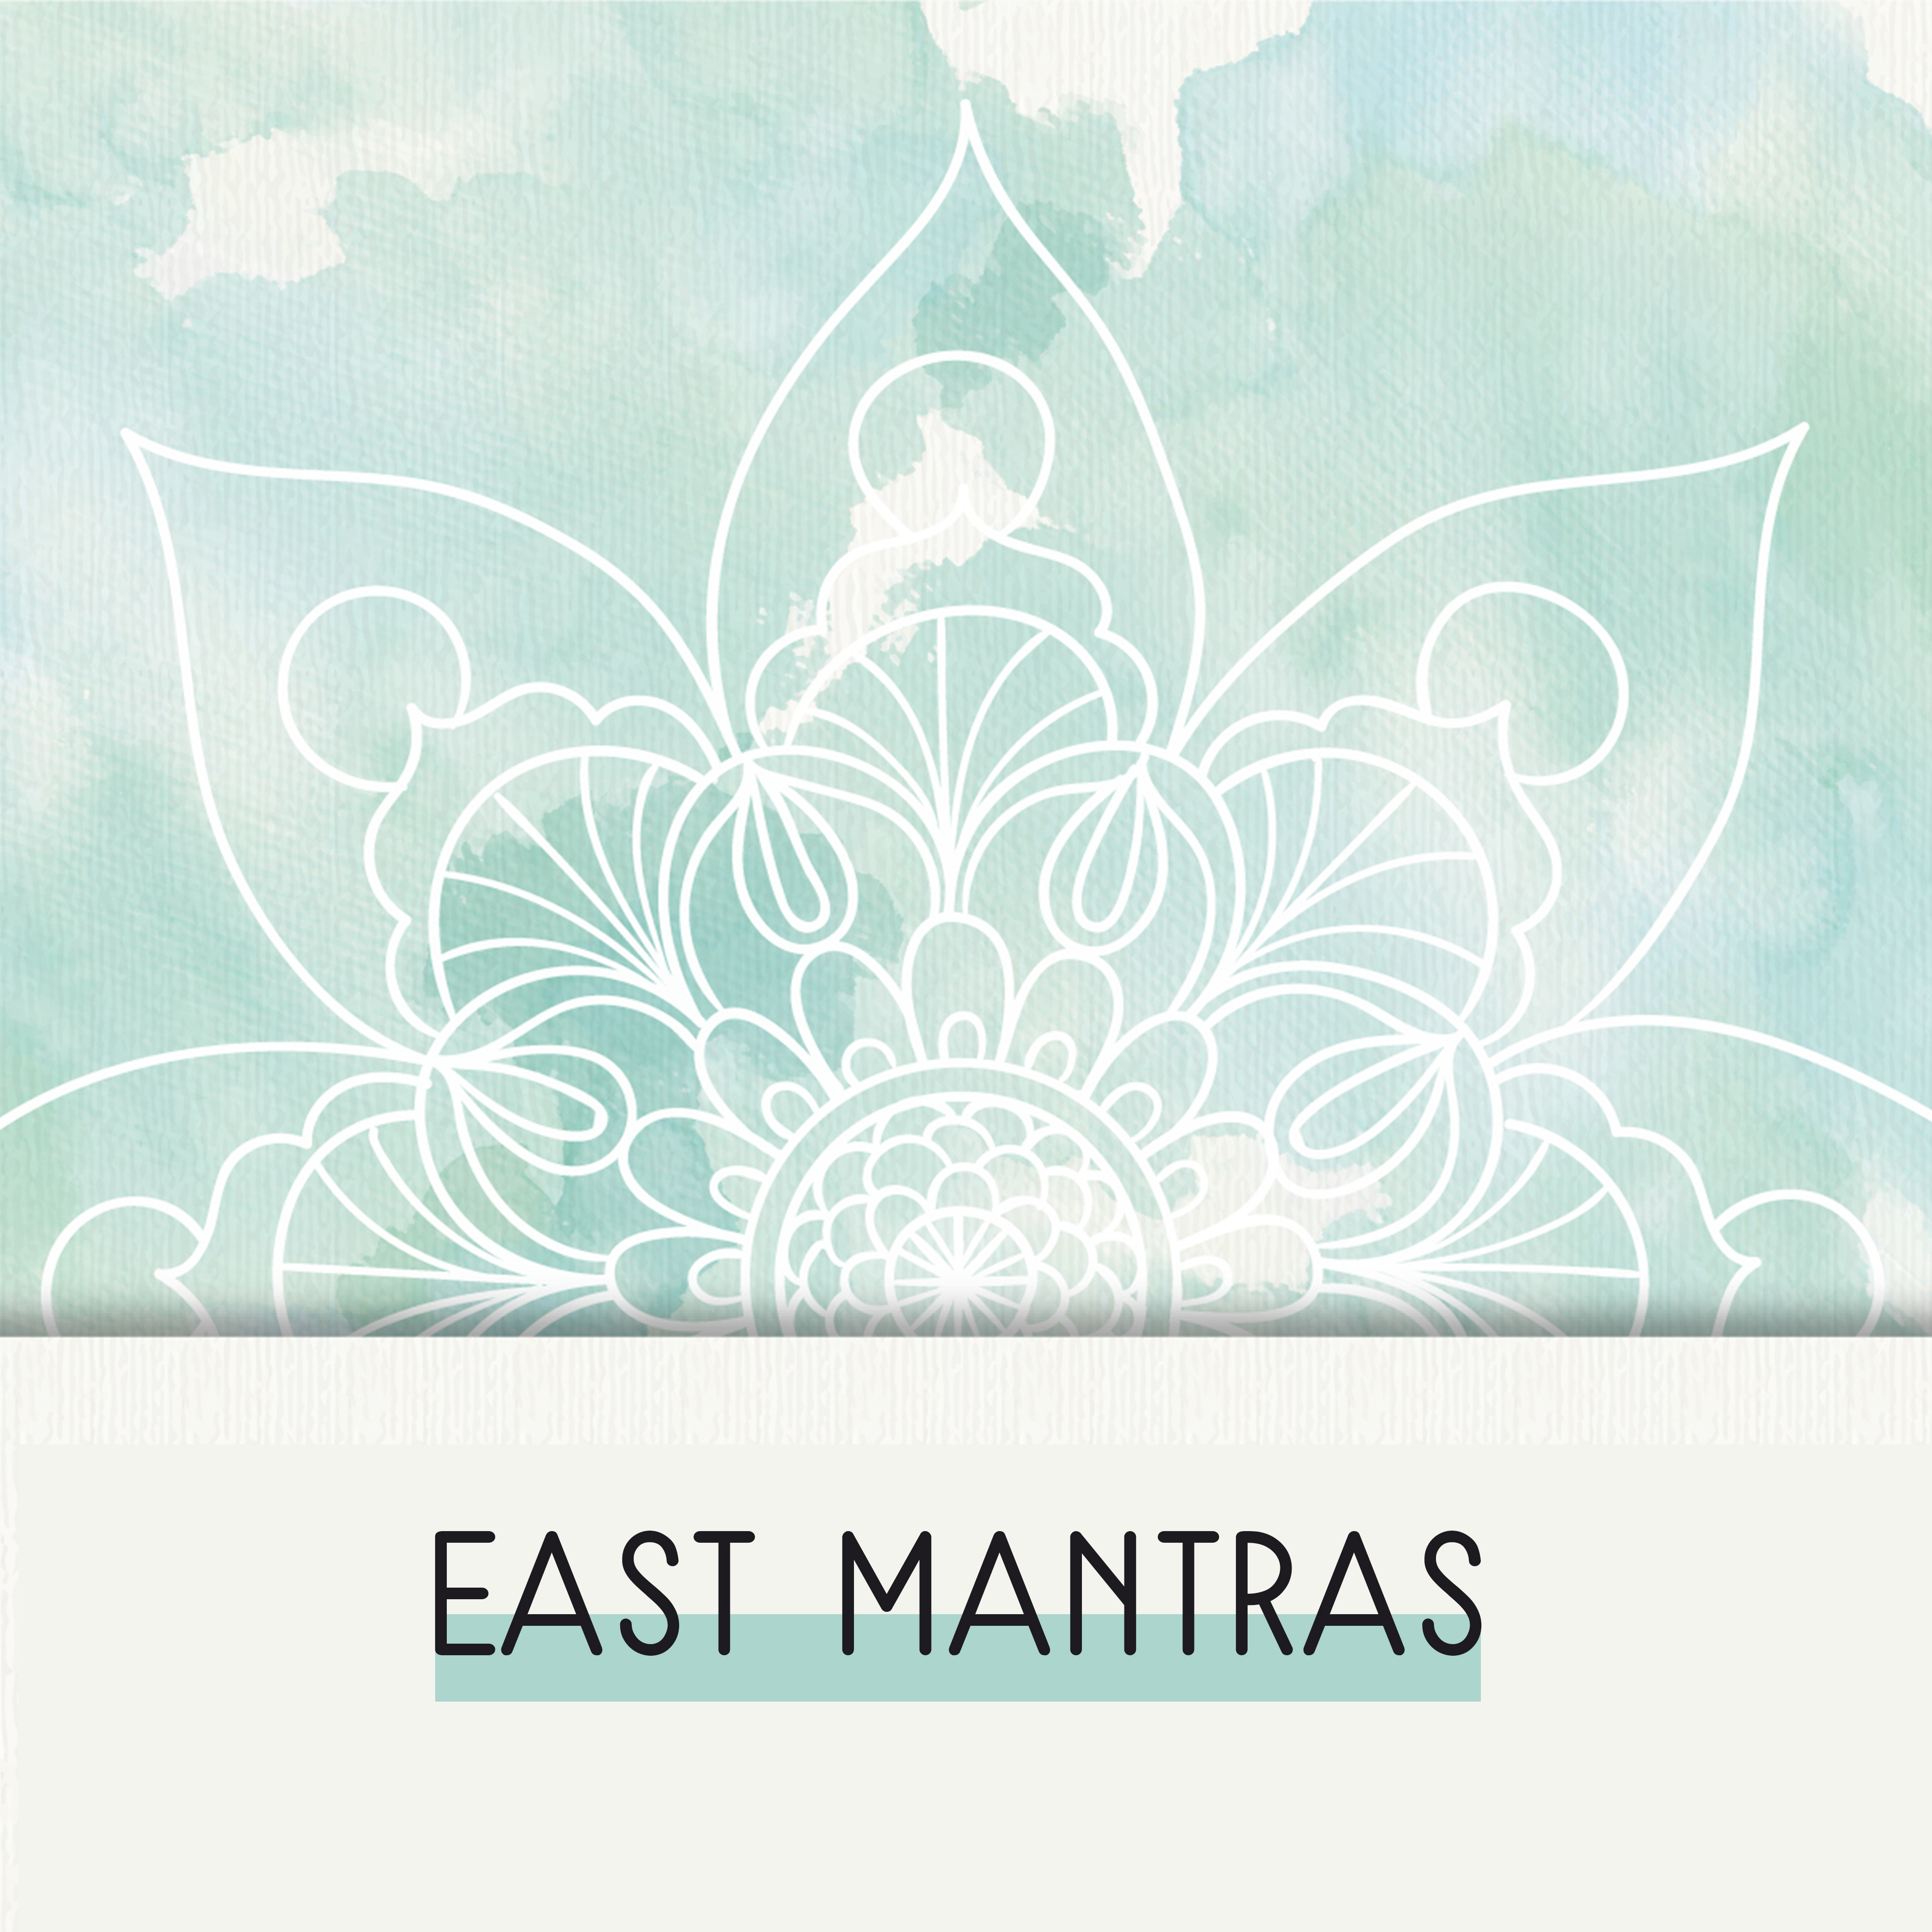 East Mantras